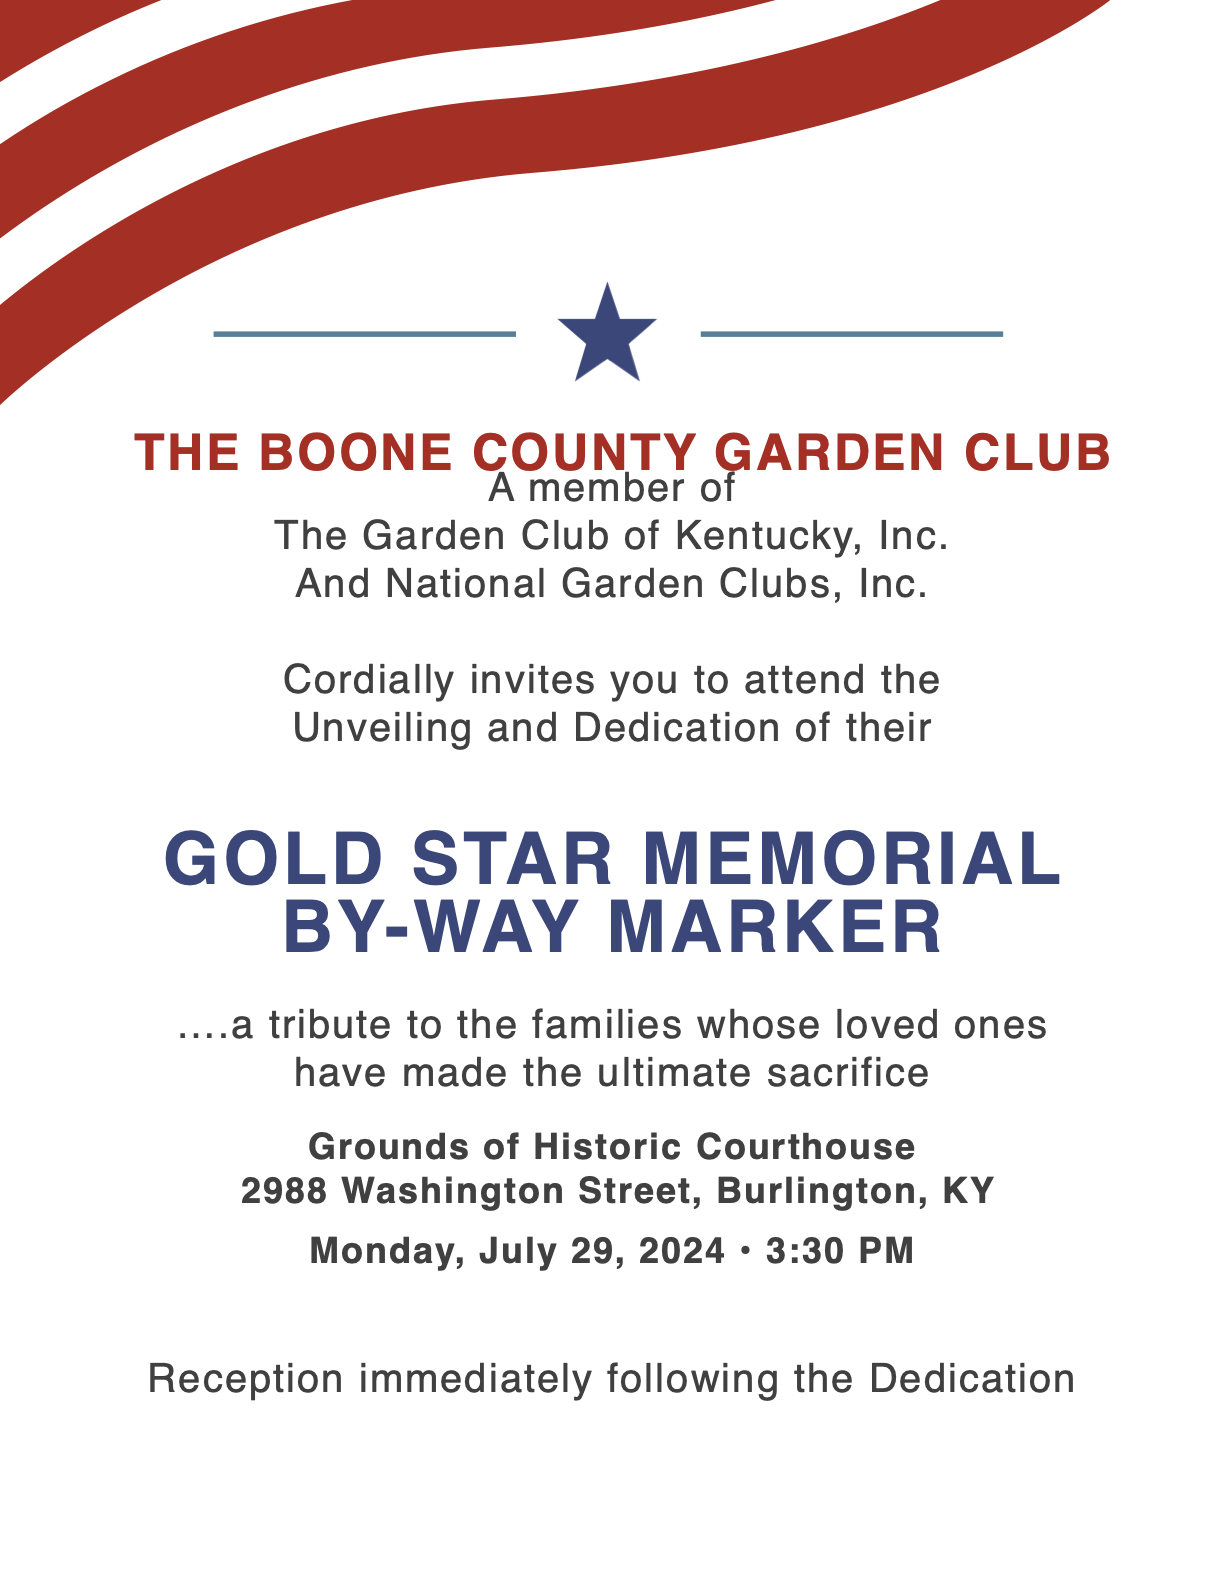 Boone County Garden Club - Gold Star By-Way Marker Dedication